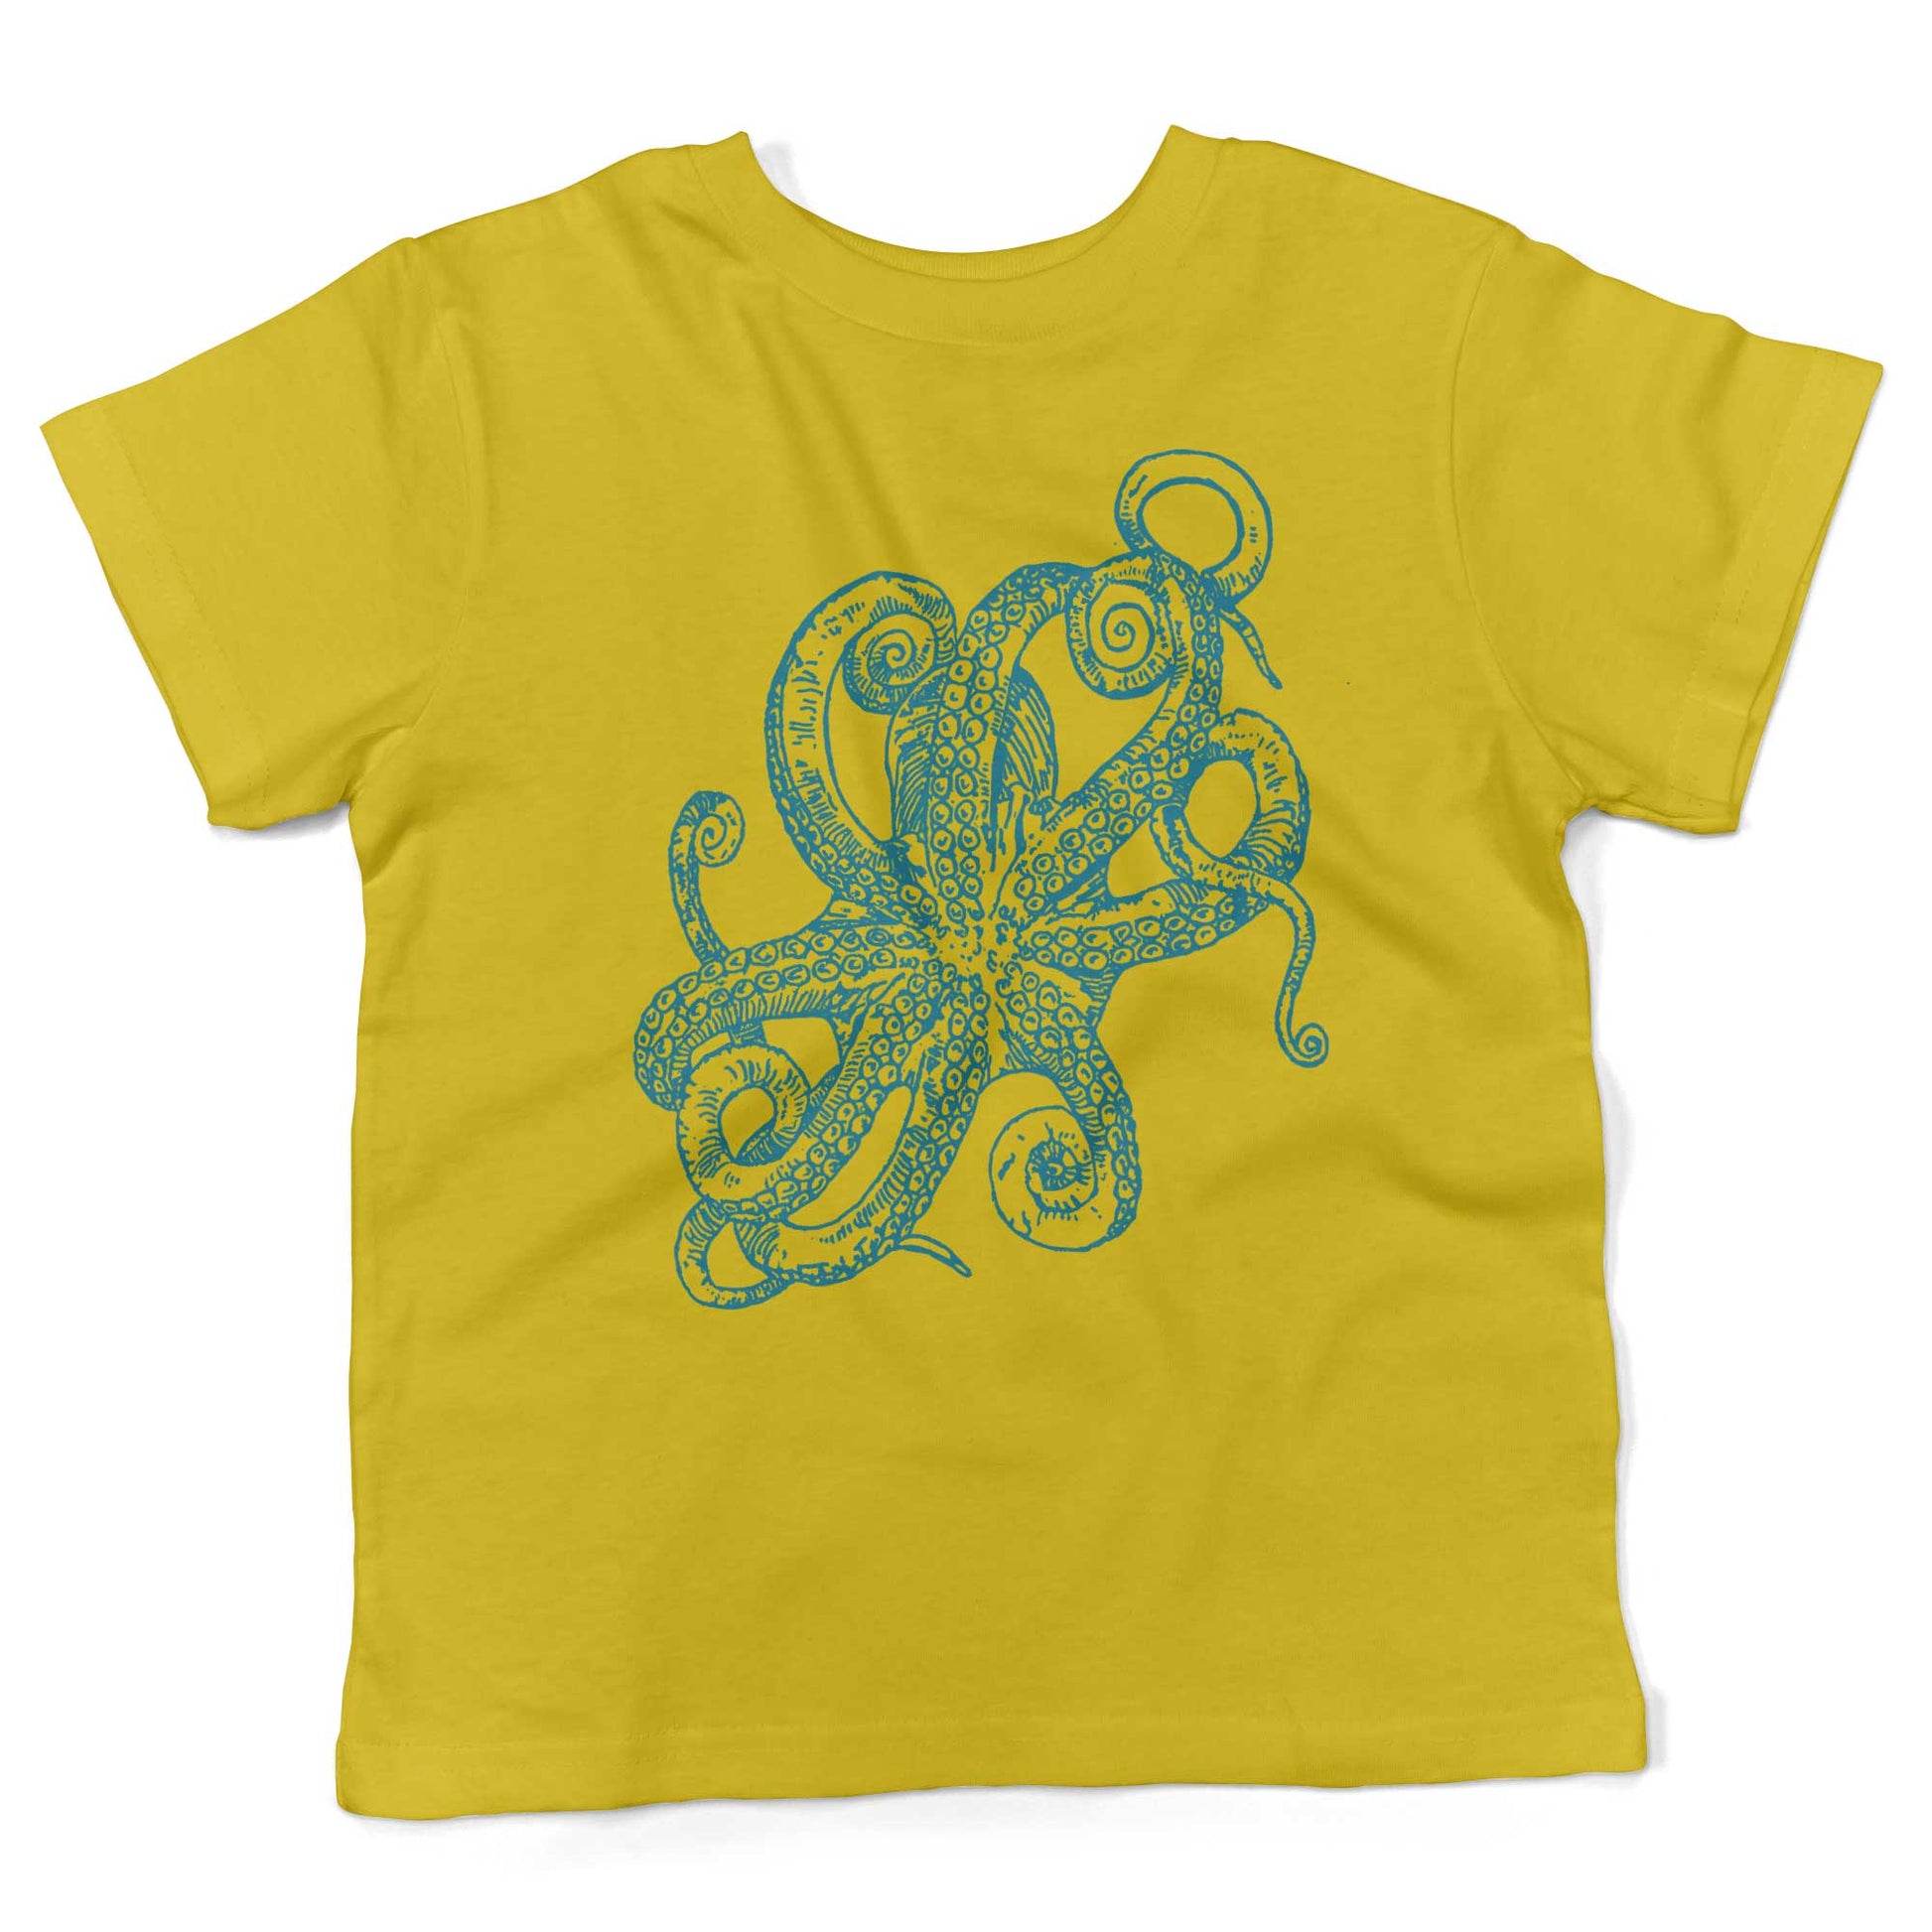 Octopus Underbelly Toddler Shirt-Sunshine Yellow-2T